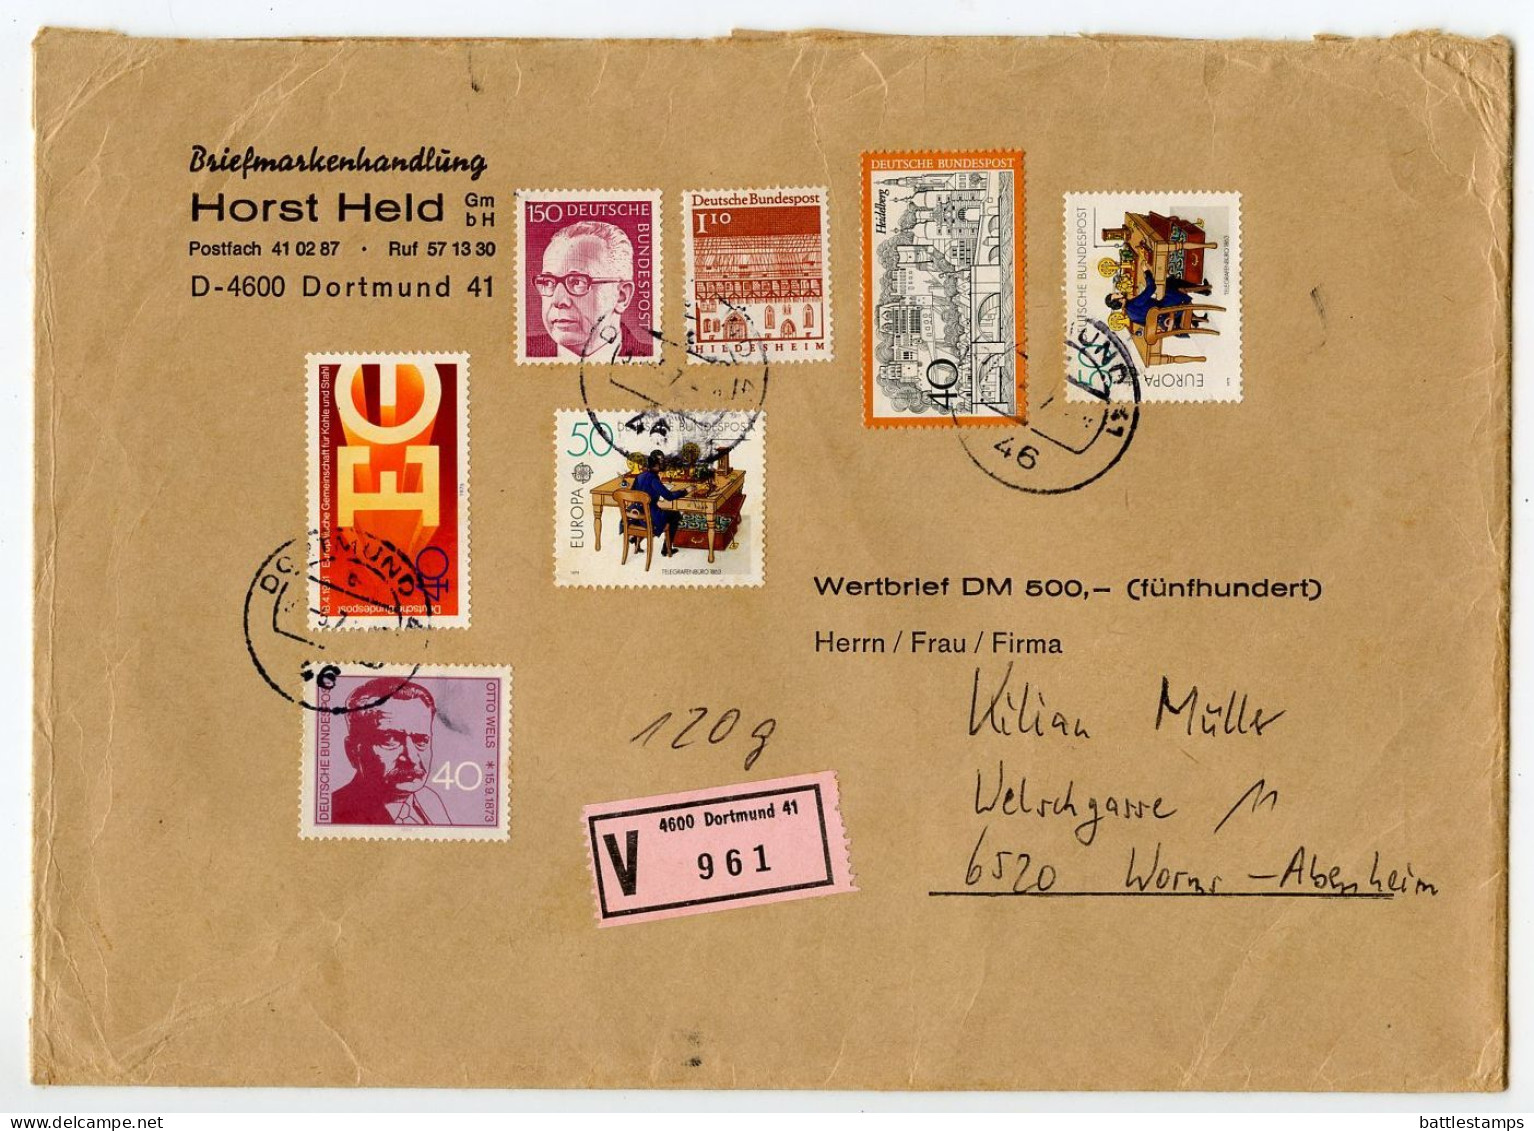 Germany, West 1979 Insured V-Label Cover; Dortmund To Worms-Abenheim; Mix Of Stamps - Cartas & Documentos